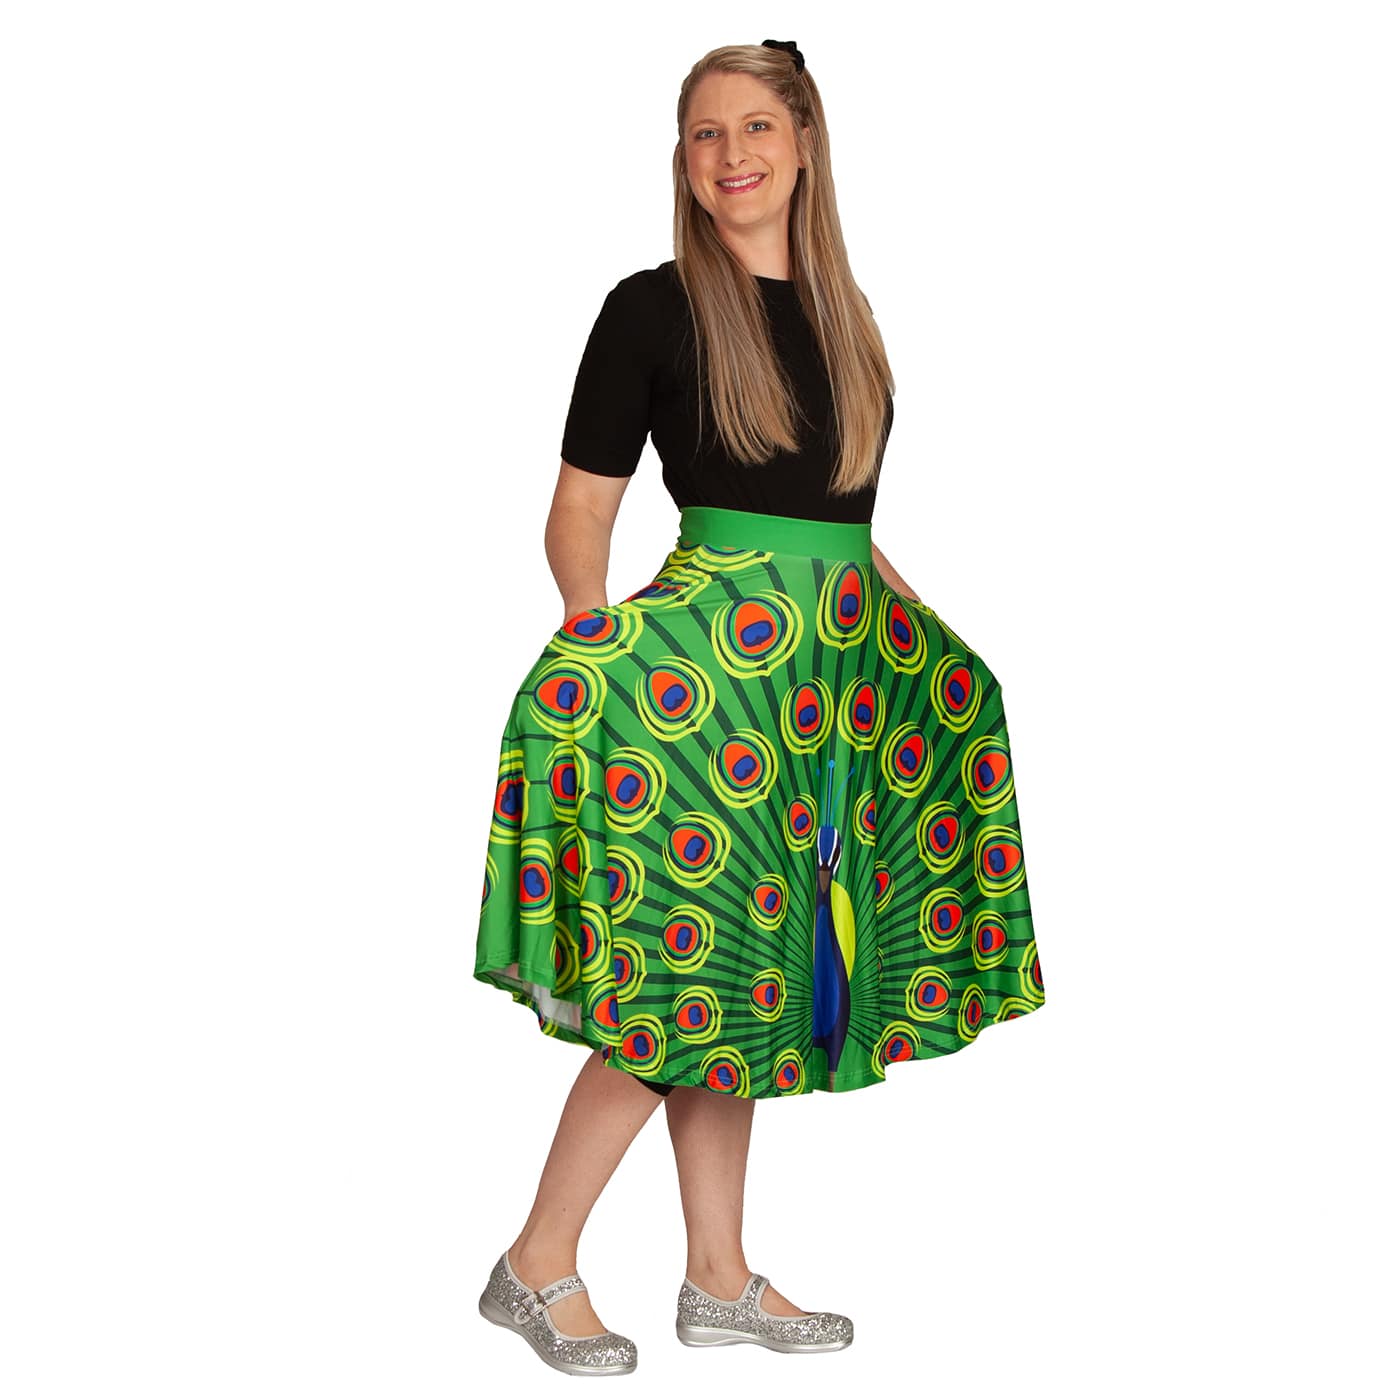 Olive Swishy Skirt by RainbowsAndFairies.com.au (Peacock - Peahen - Animal Print - Bird Print - Circle Skirt With Pockets - Mod Retro) - SKU: CL_SWISH_OLIVE_ORG - Pic-08